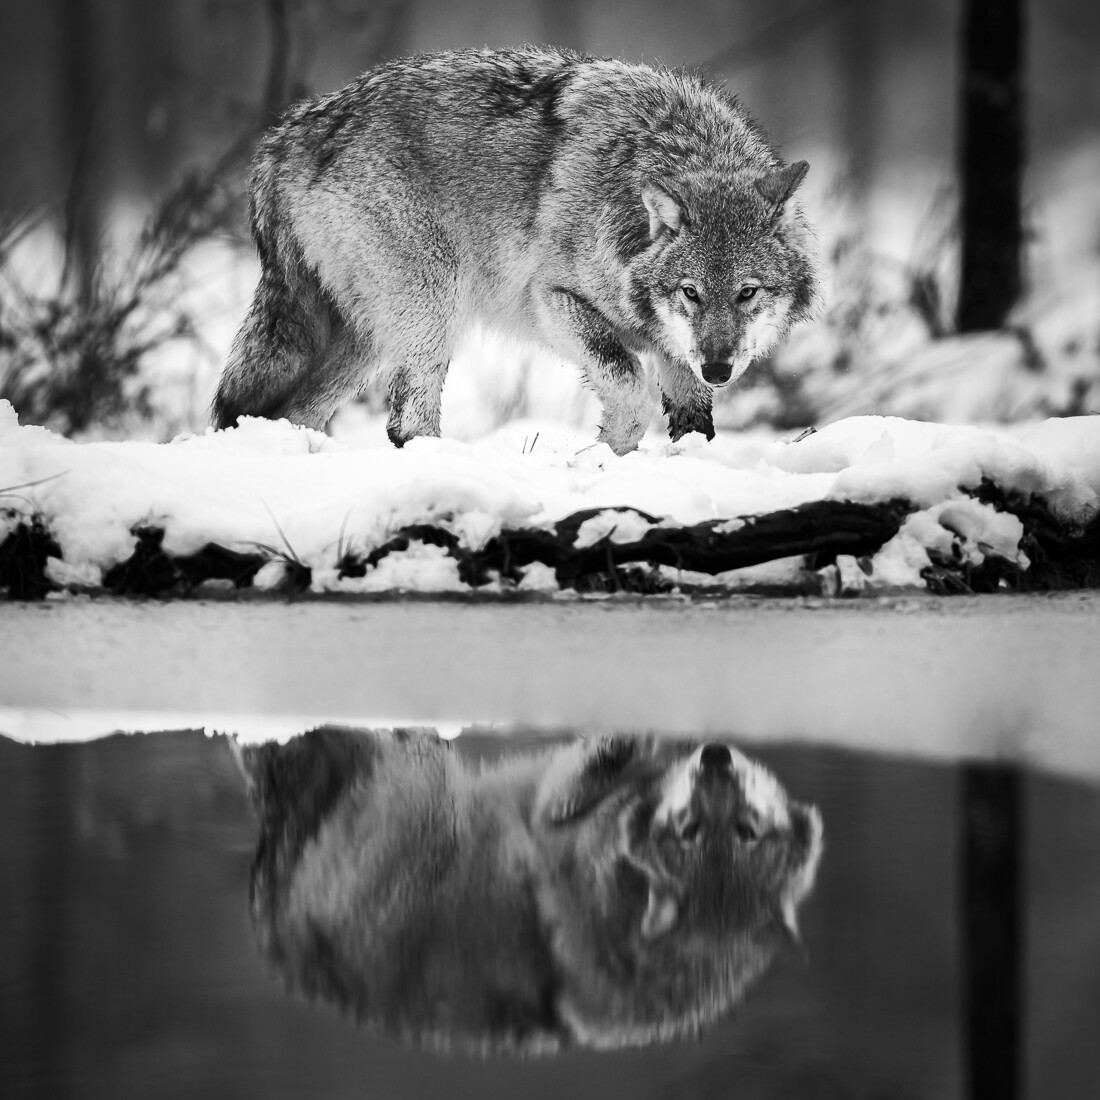 1-е место в категории Дикая природа среди любителей, 2021. Отражение волка. Автор Ристо Раунио